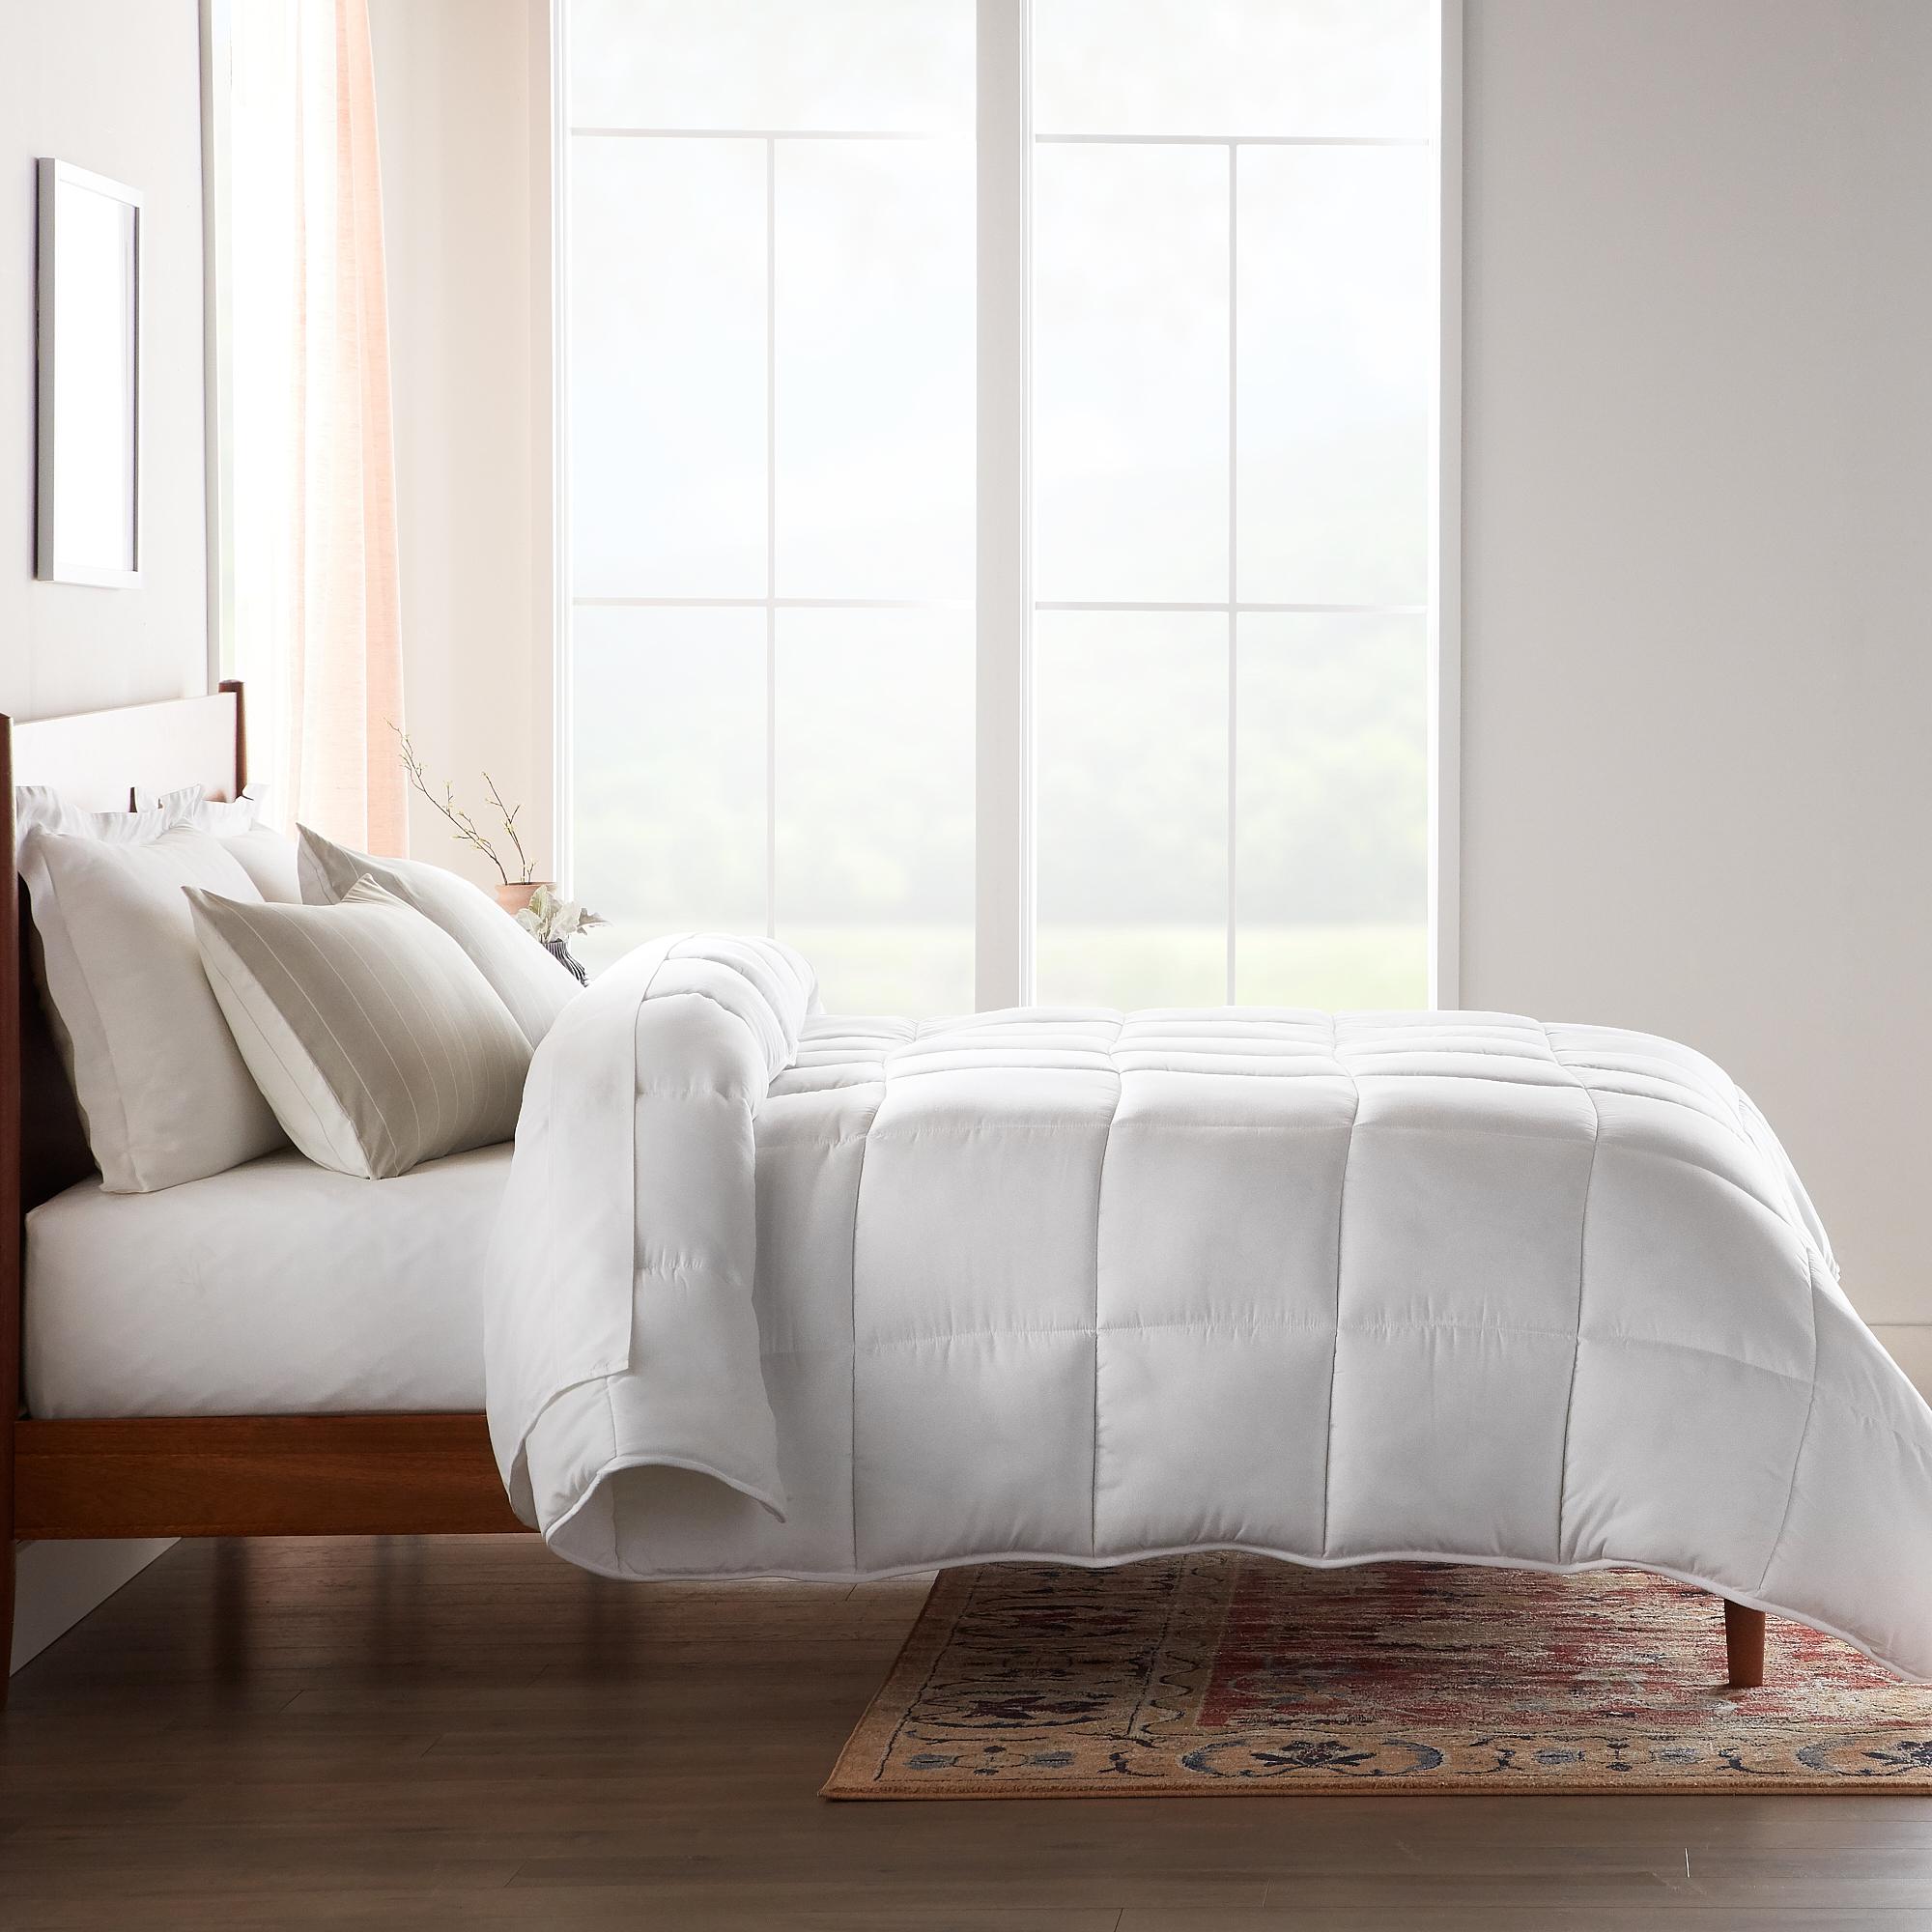 Rest Haven All-Season Down Alternative Comforter, Twin, White - image 5 of 10